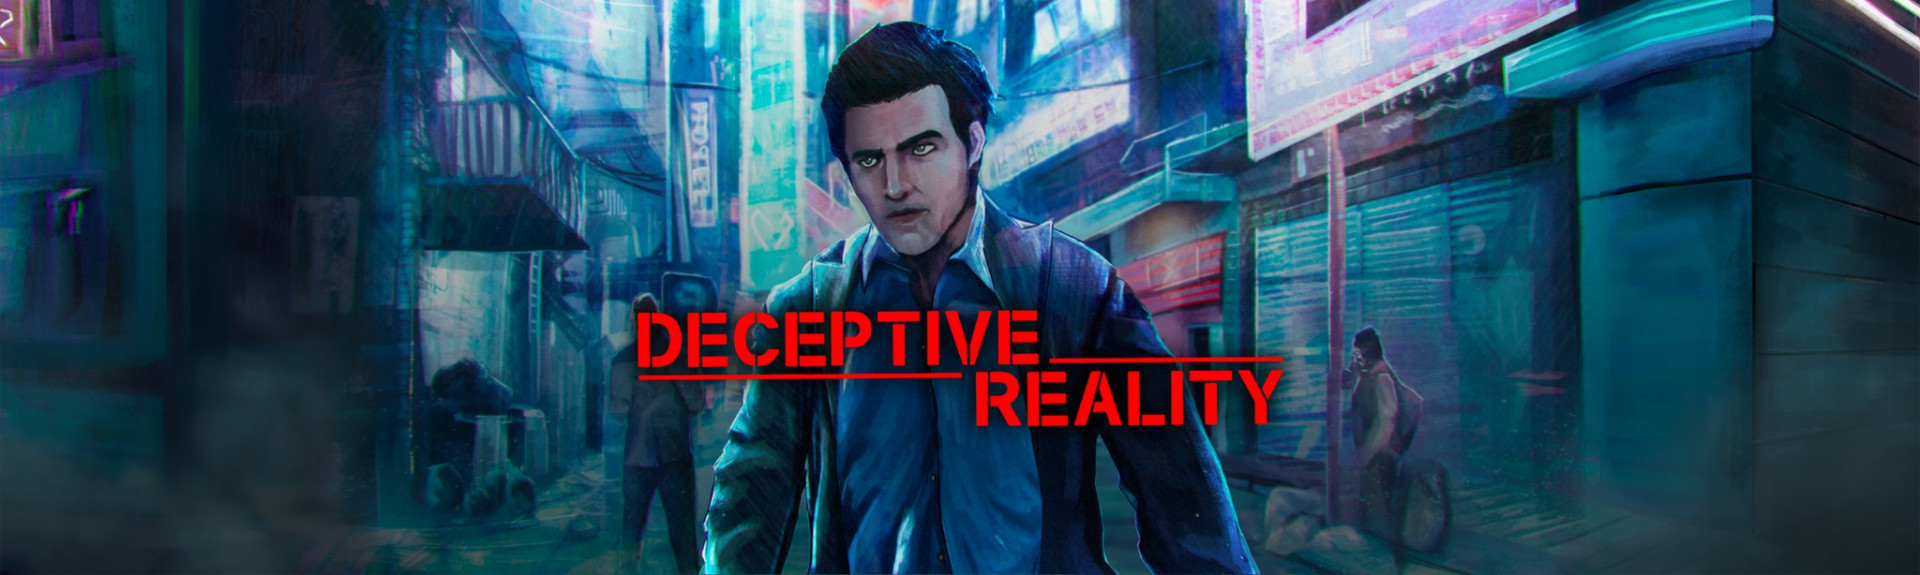 Deceptive Reality